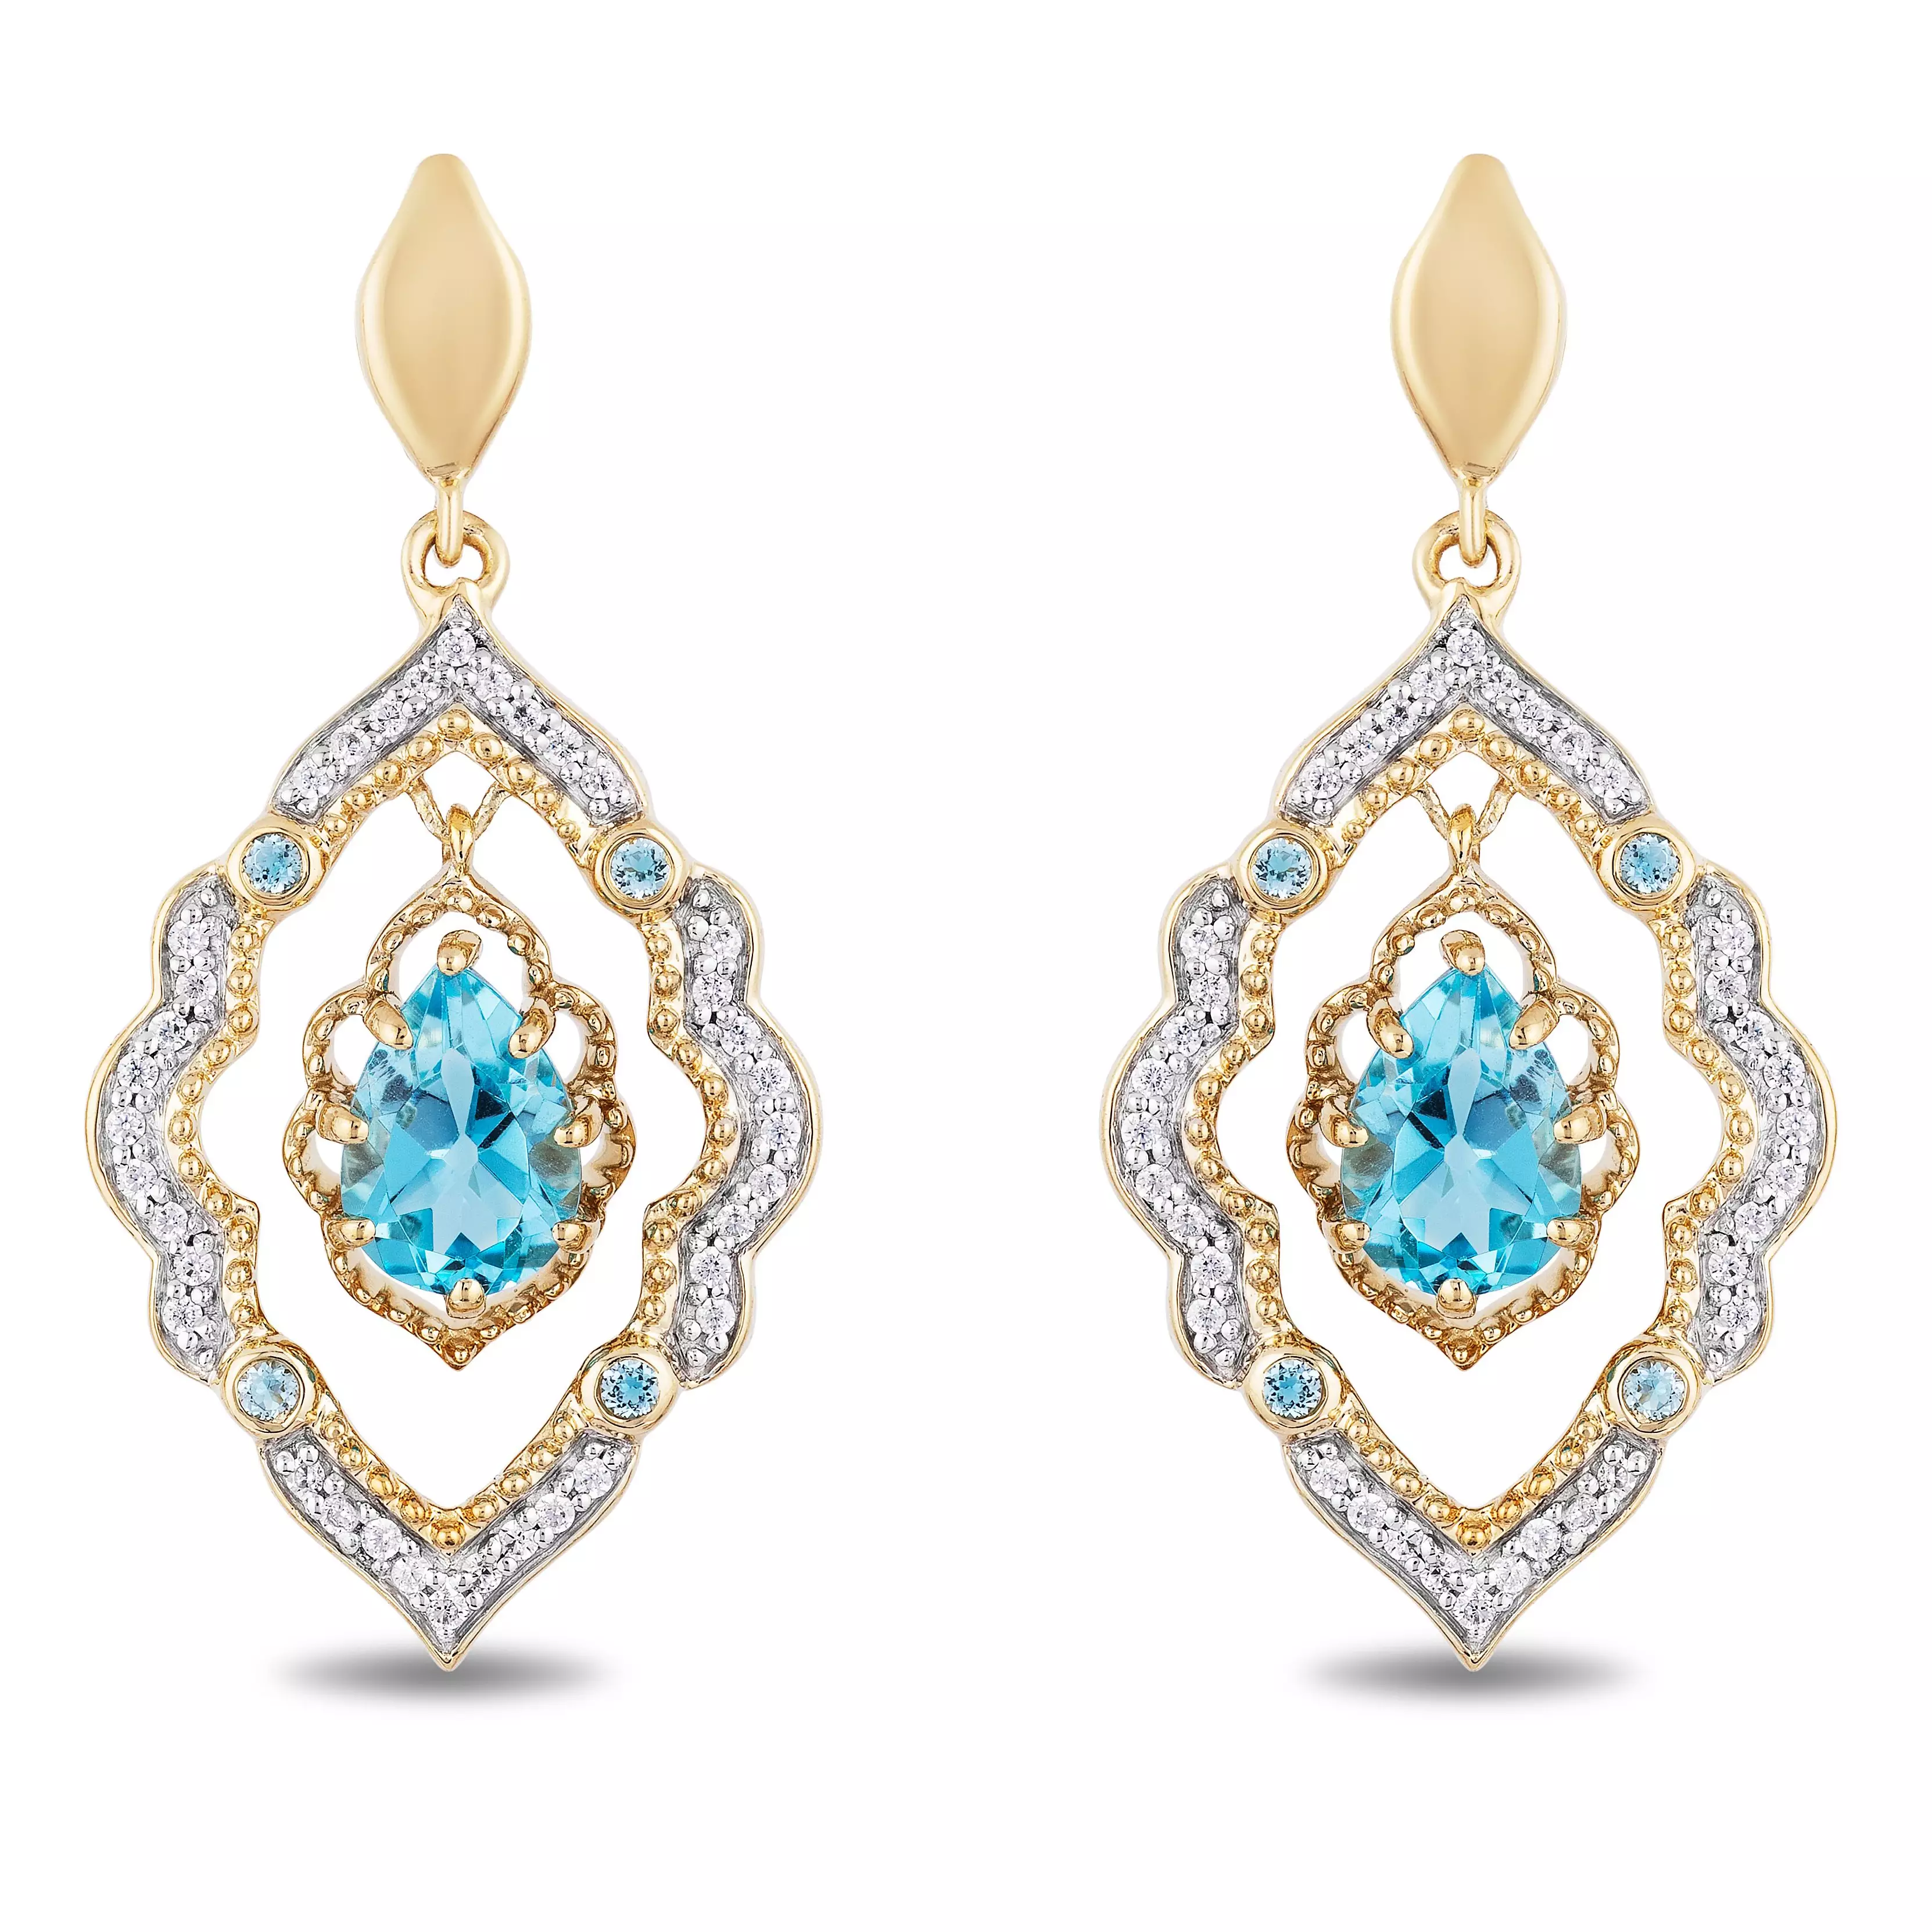 Diamond 9ct yellow gold drop earrings inspired by Aladdin.